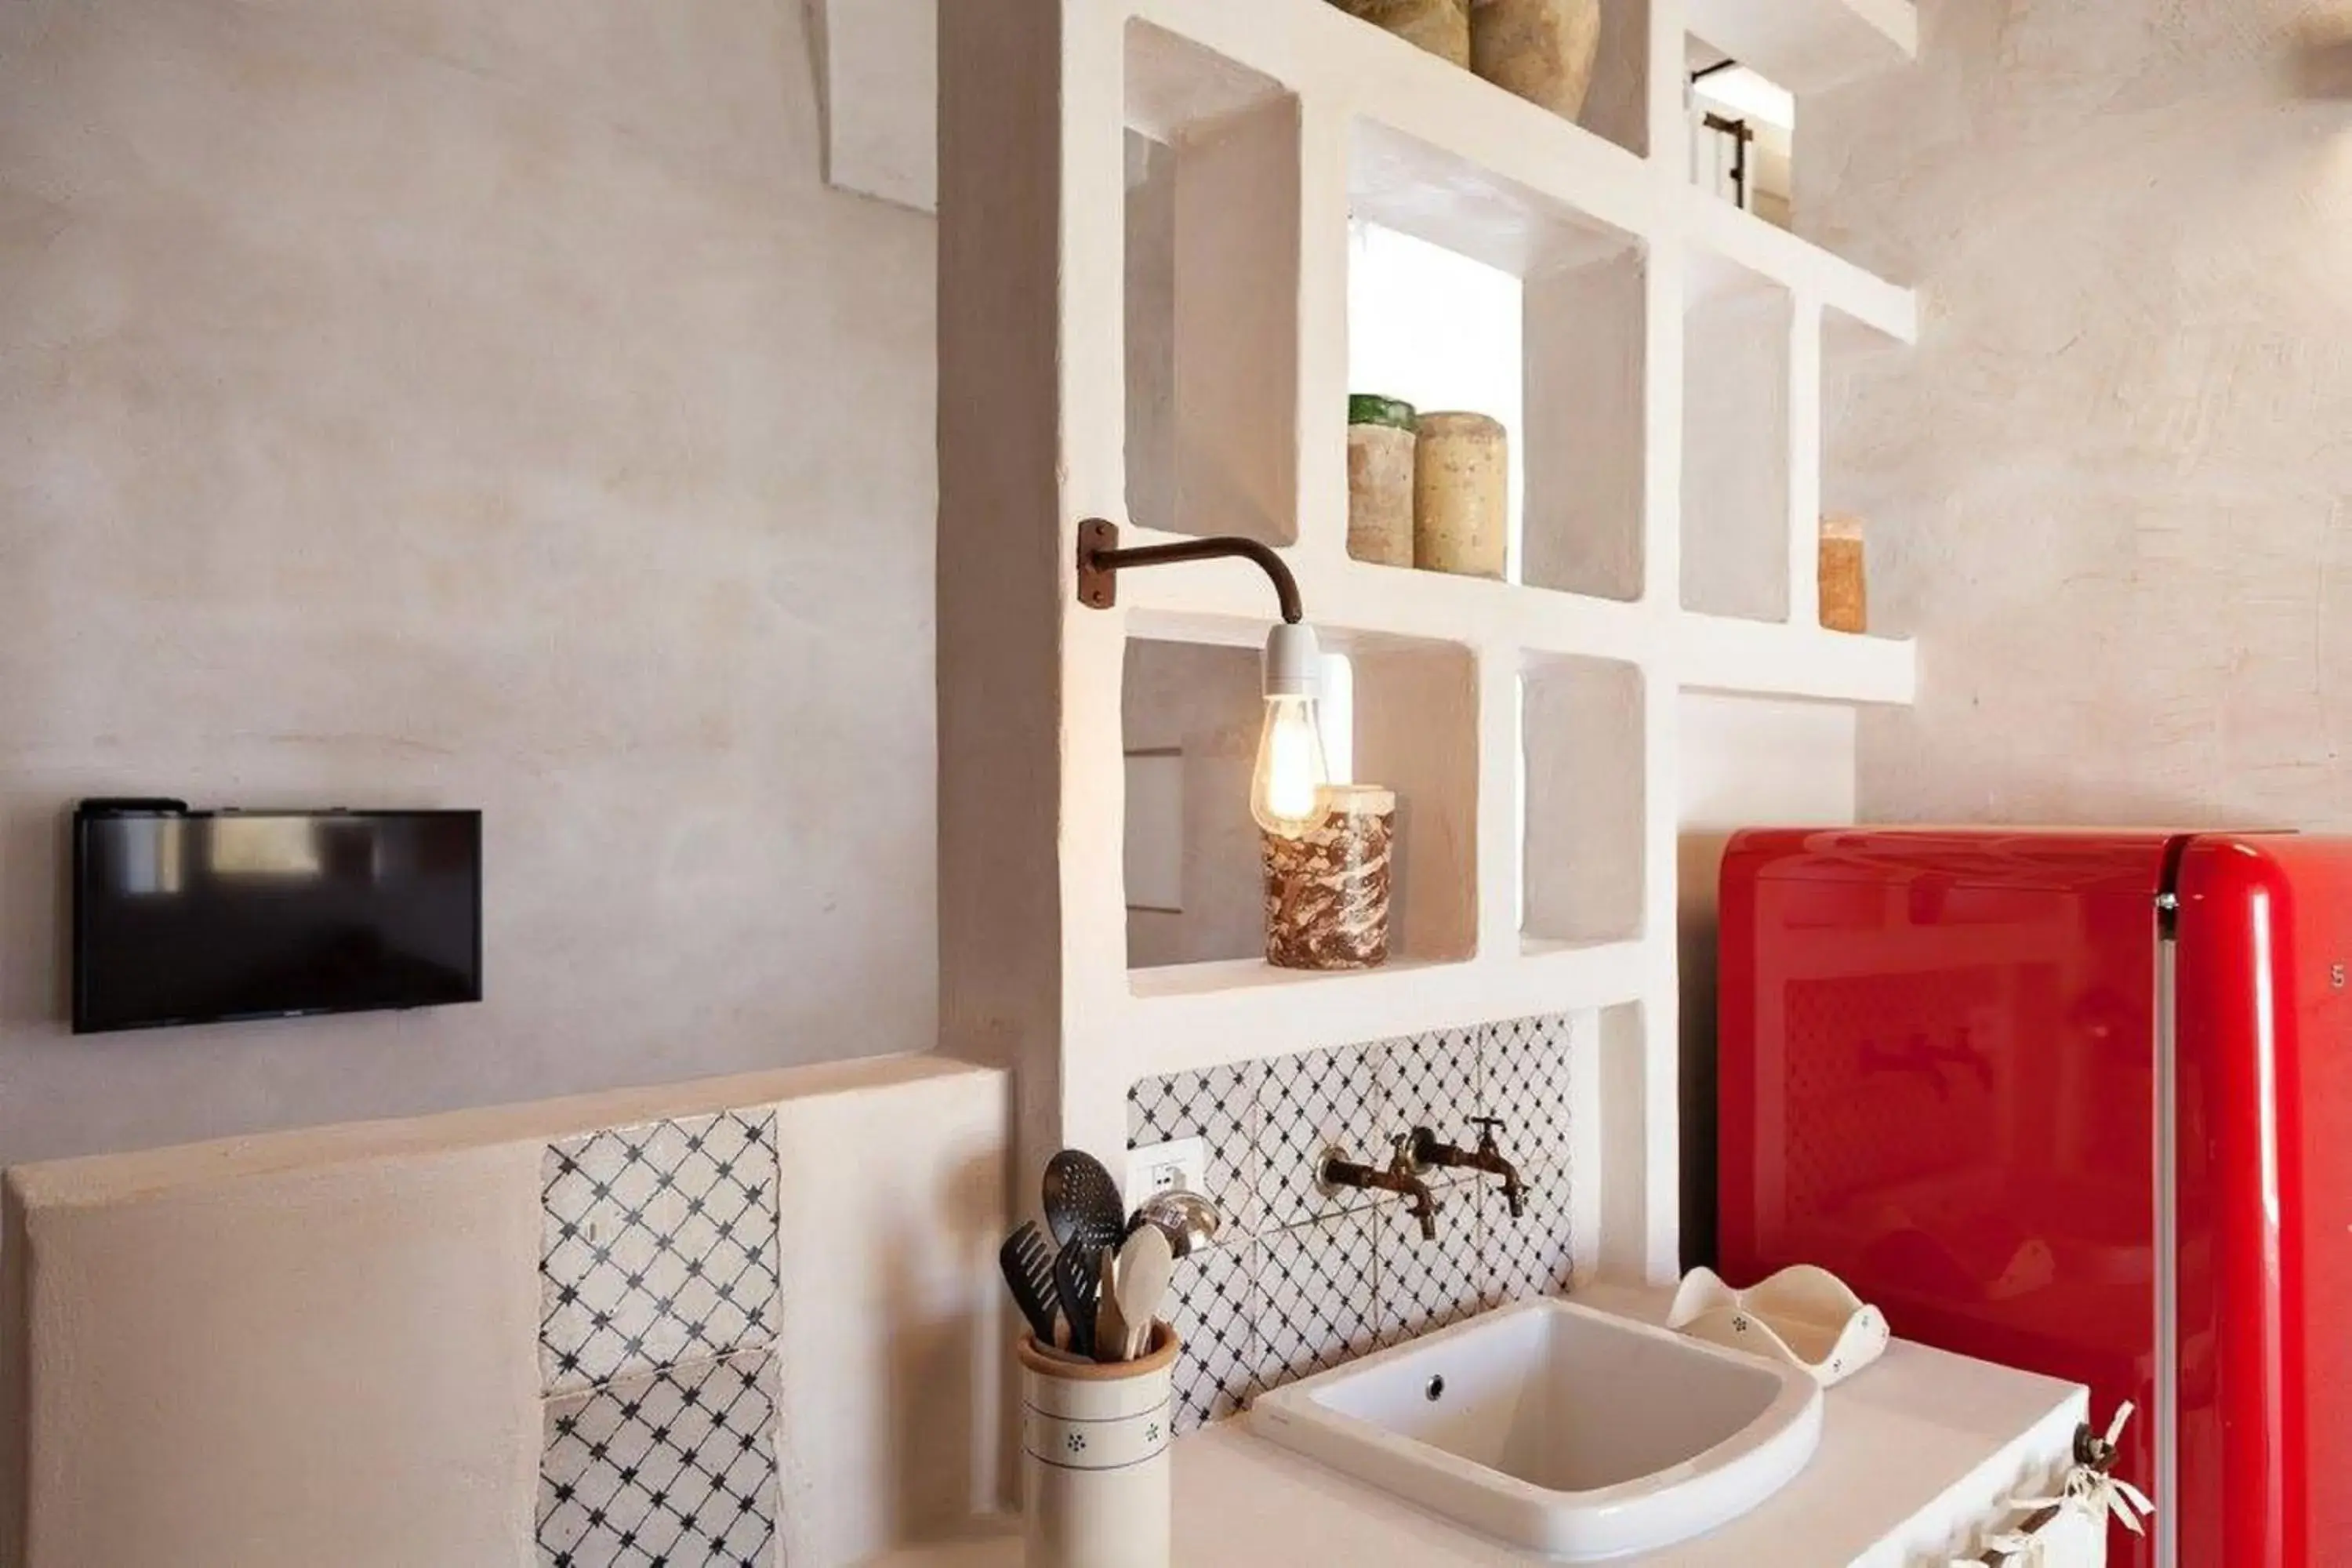 Area and facilities, Bathroom in Borgo Sentinella